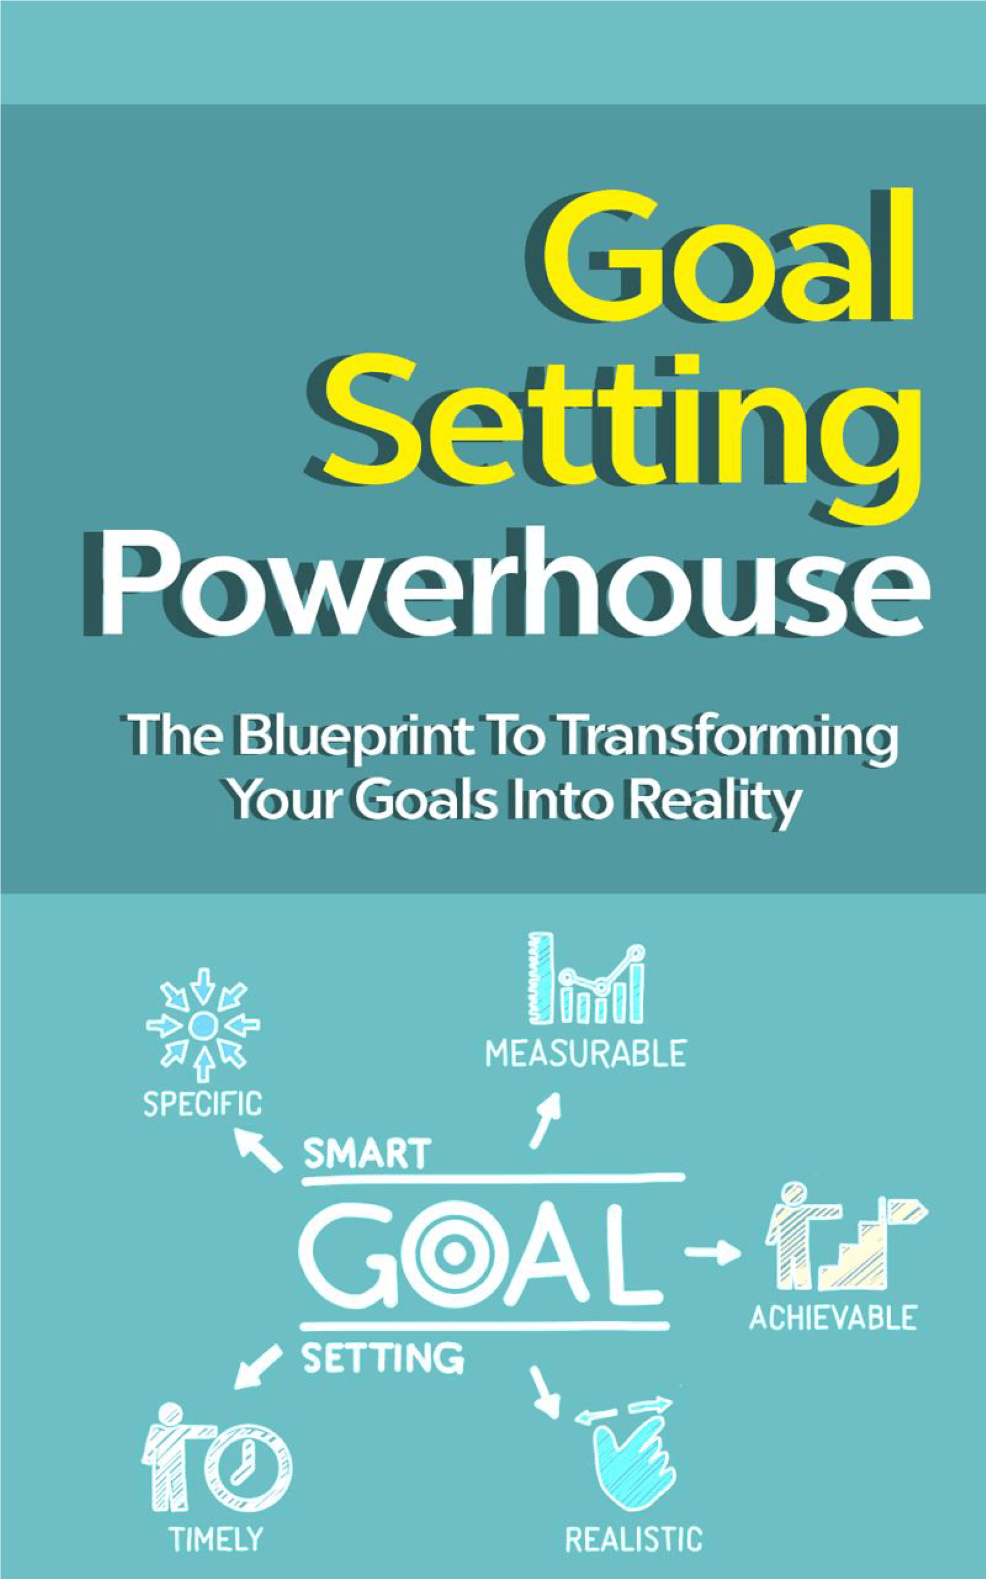 Goal Setting Powerhouse Gold